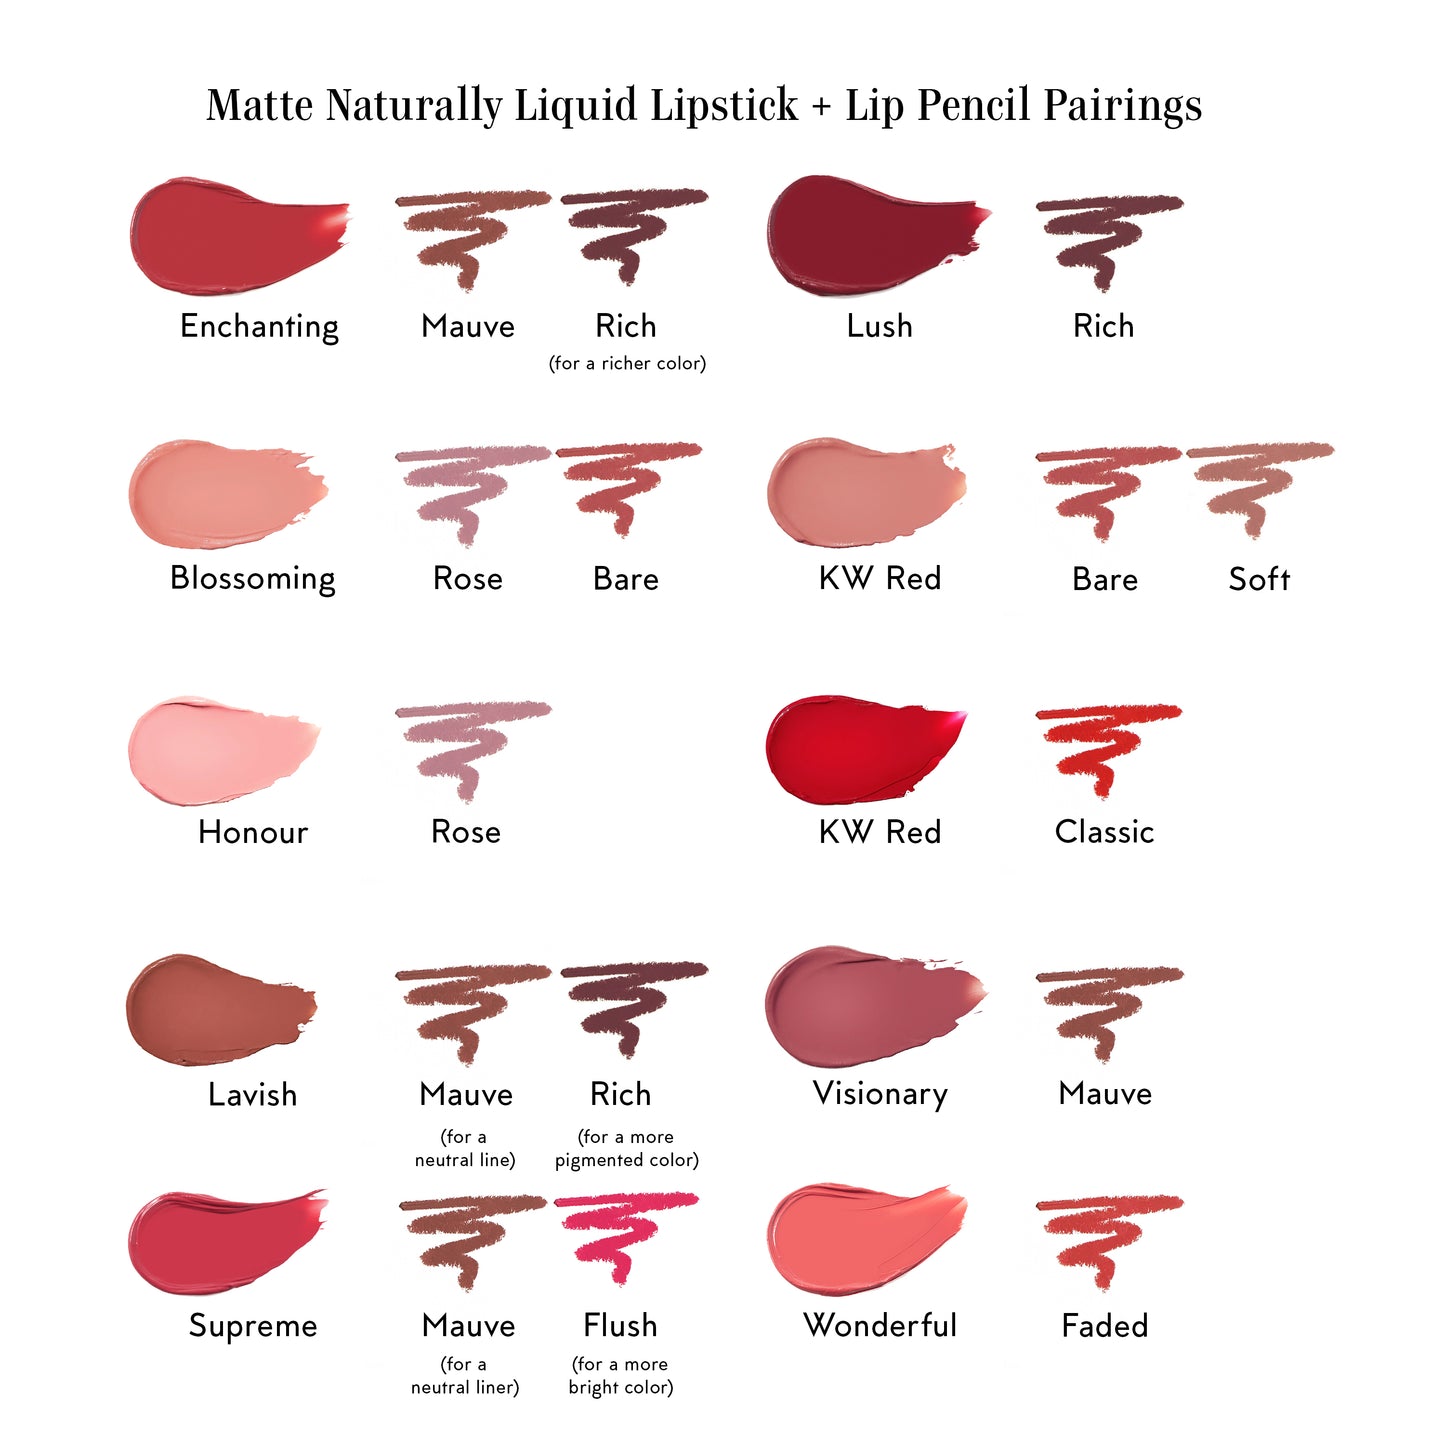 Matte, Naturally Liquid Lipstick--Lush